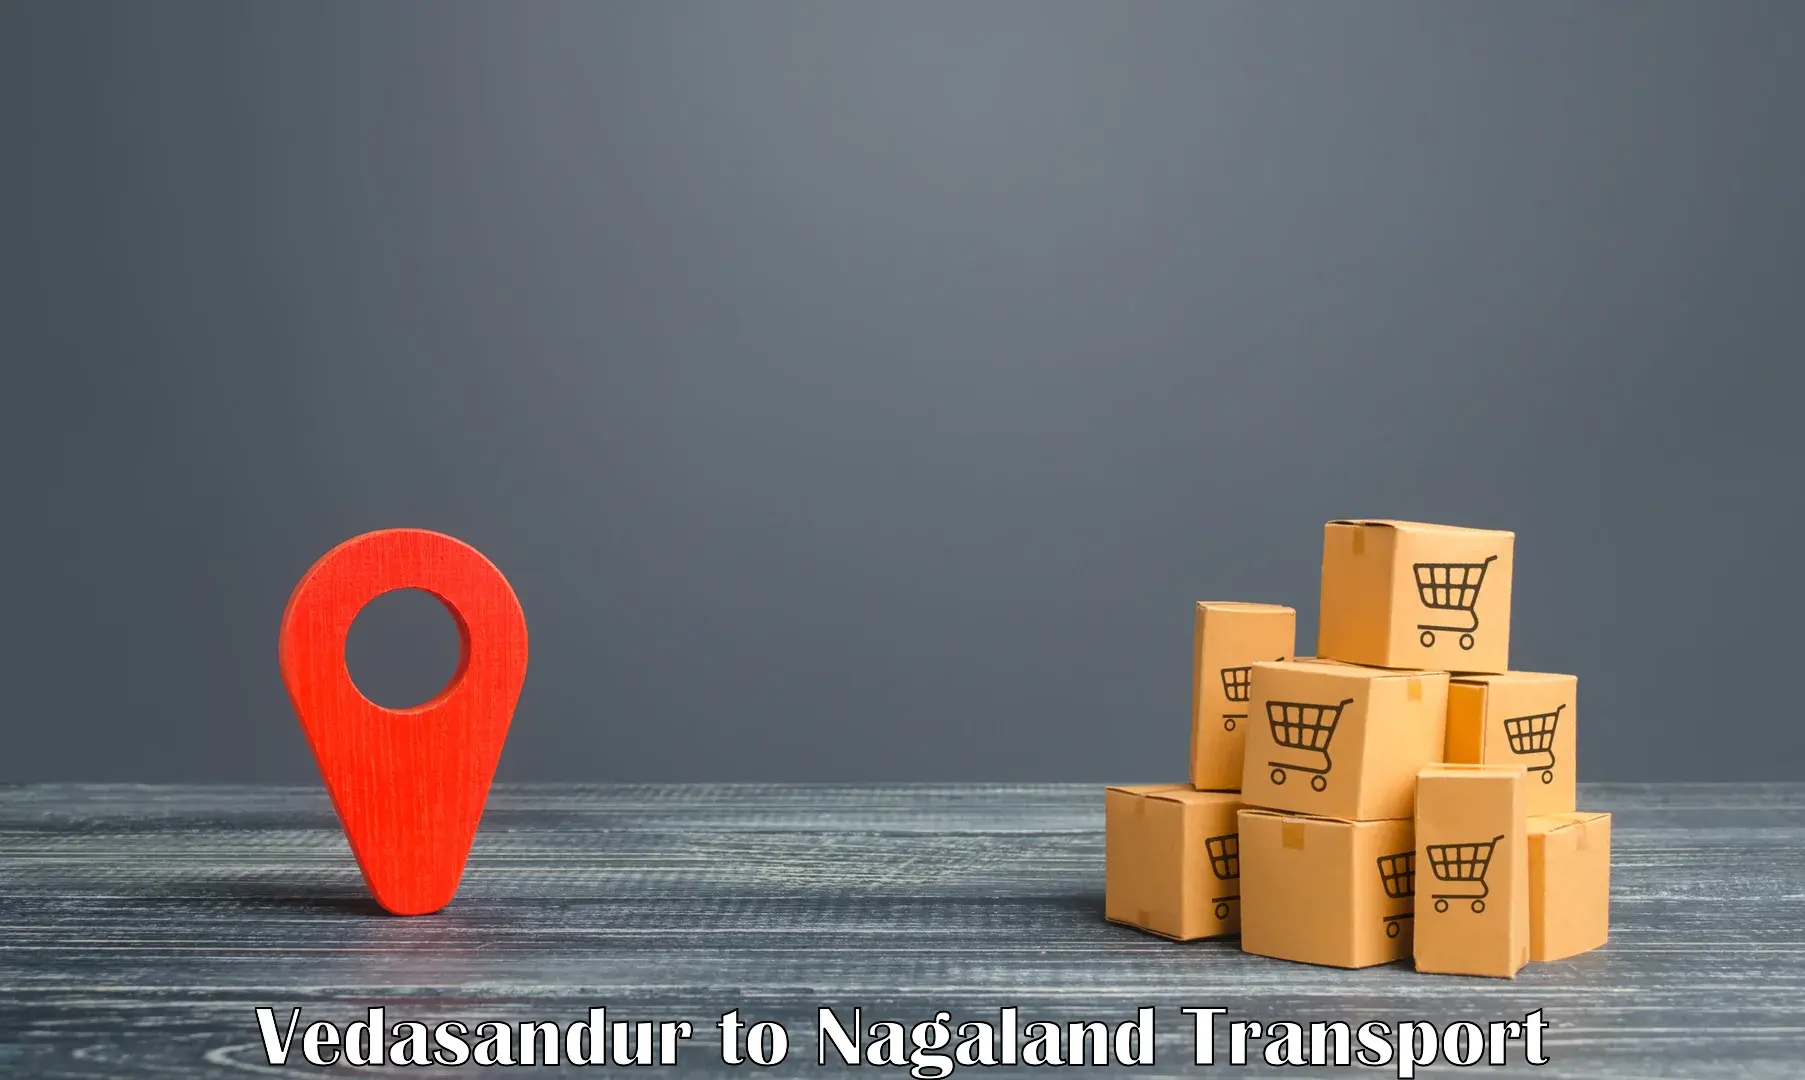 Container transport service Vedasandur to Nagaland